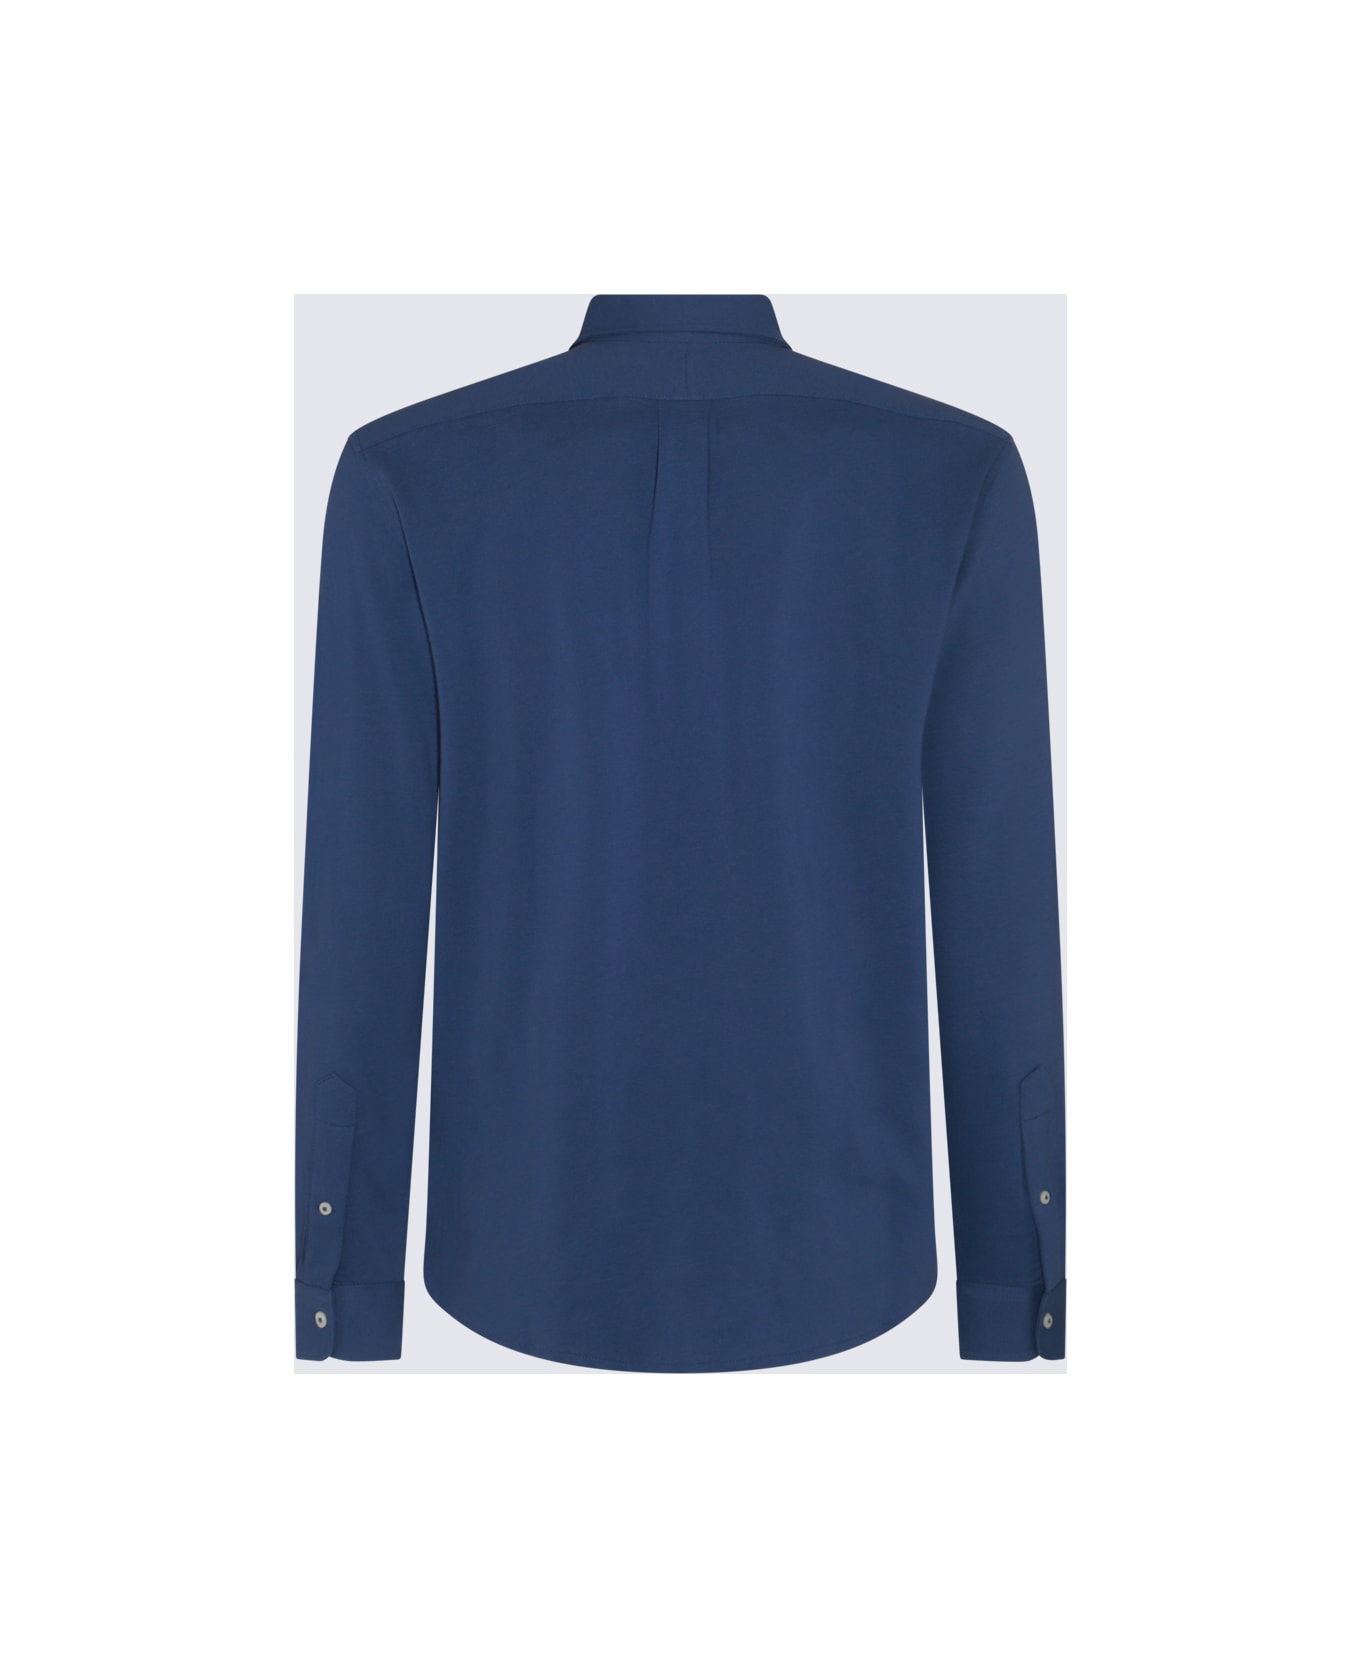 Polo Ralph Lauren Dark Blue Cotton Shirt - OLD ROYAL